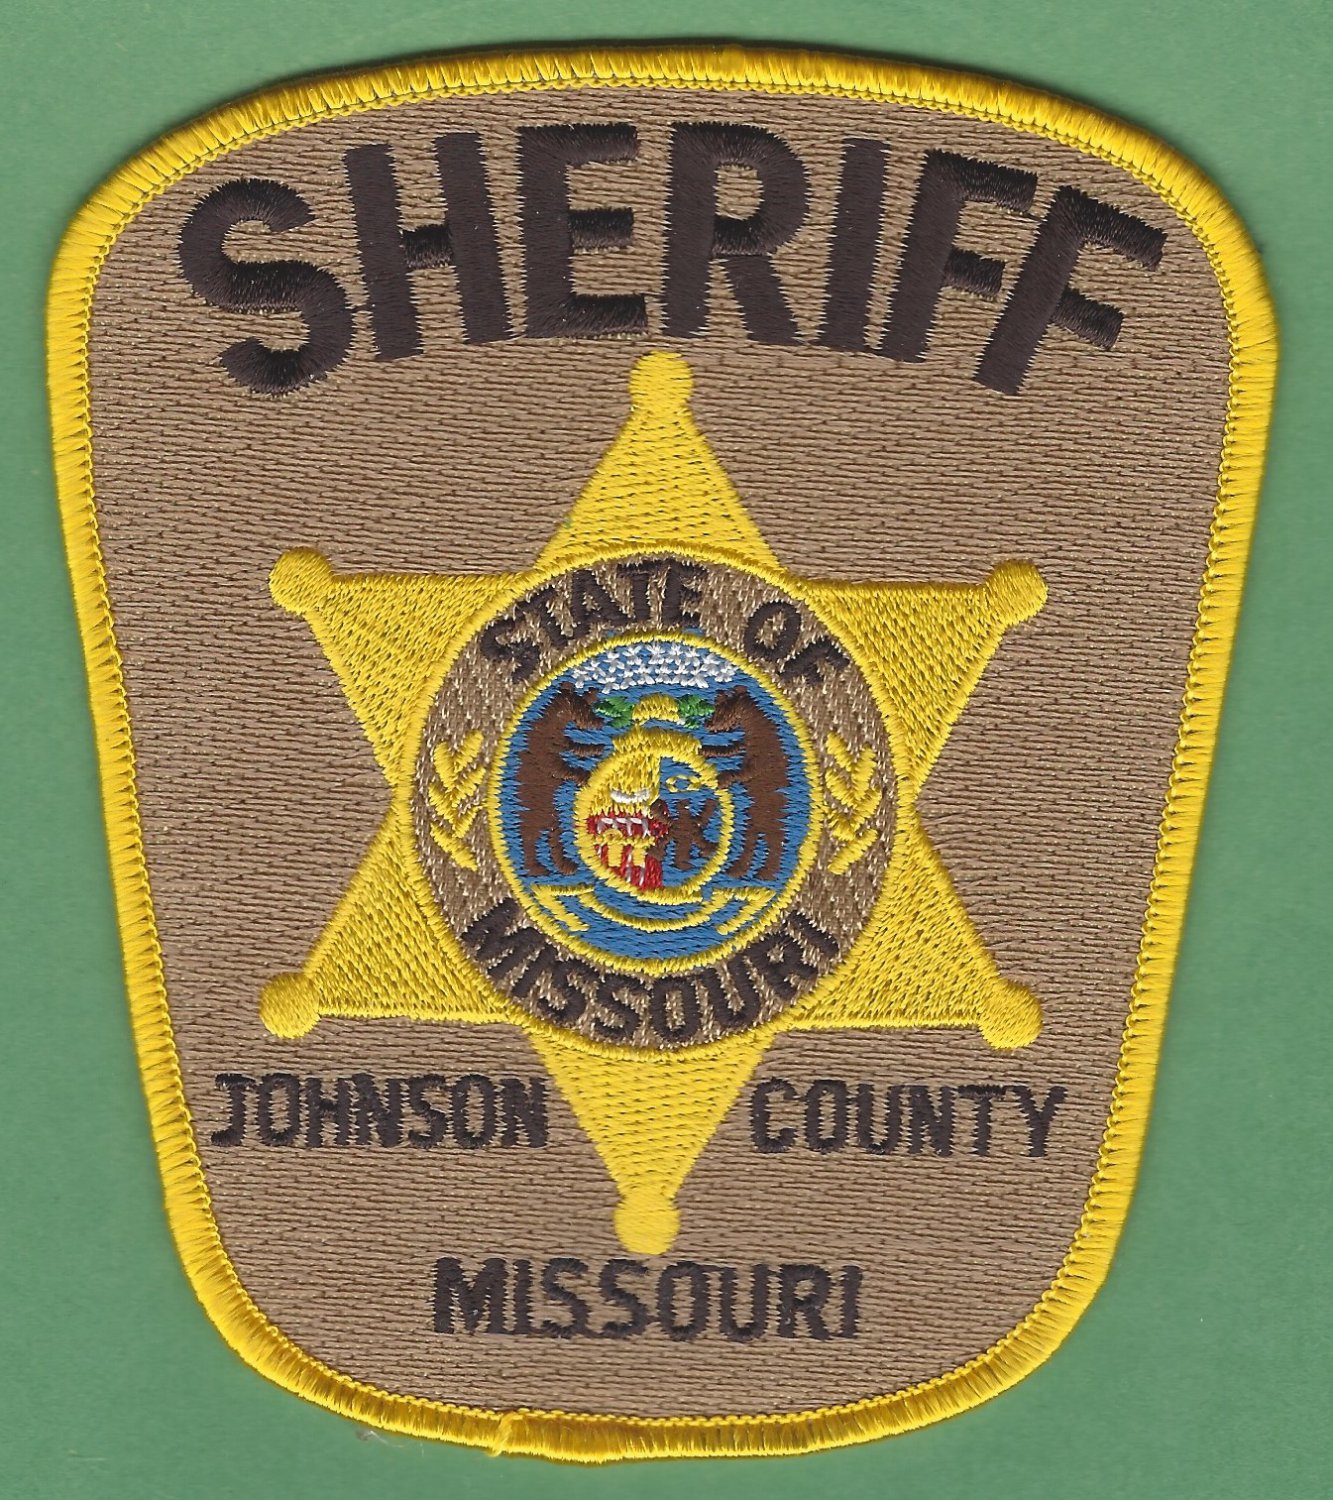 Johnson County Sheriff Missouri Police Patch